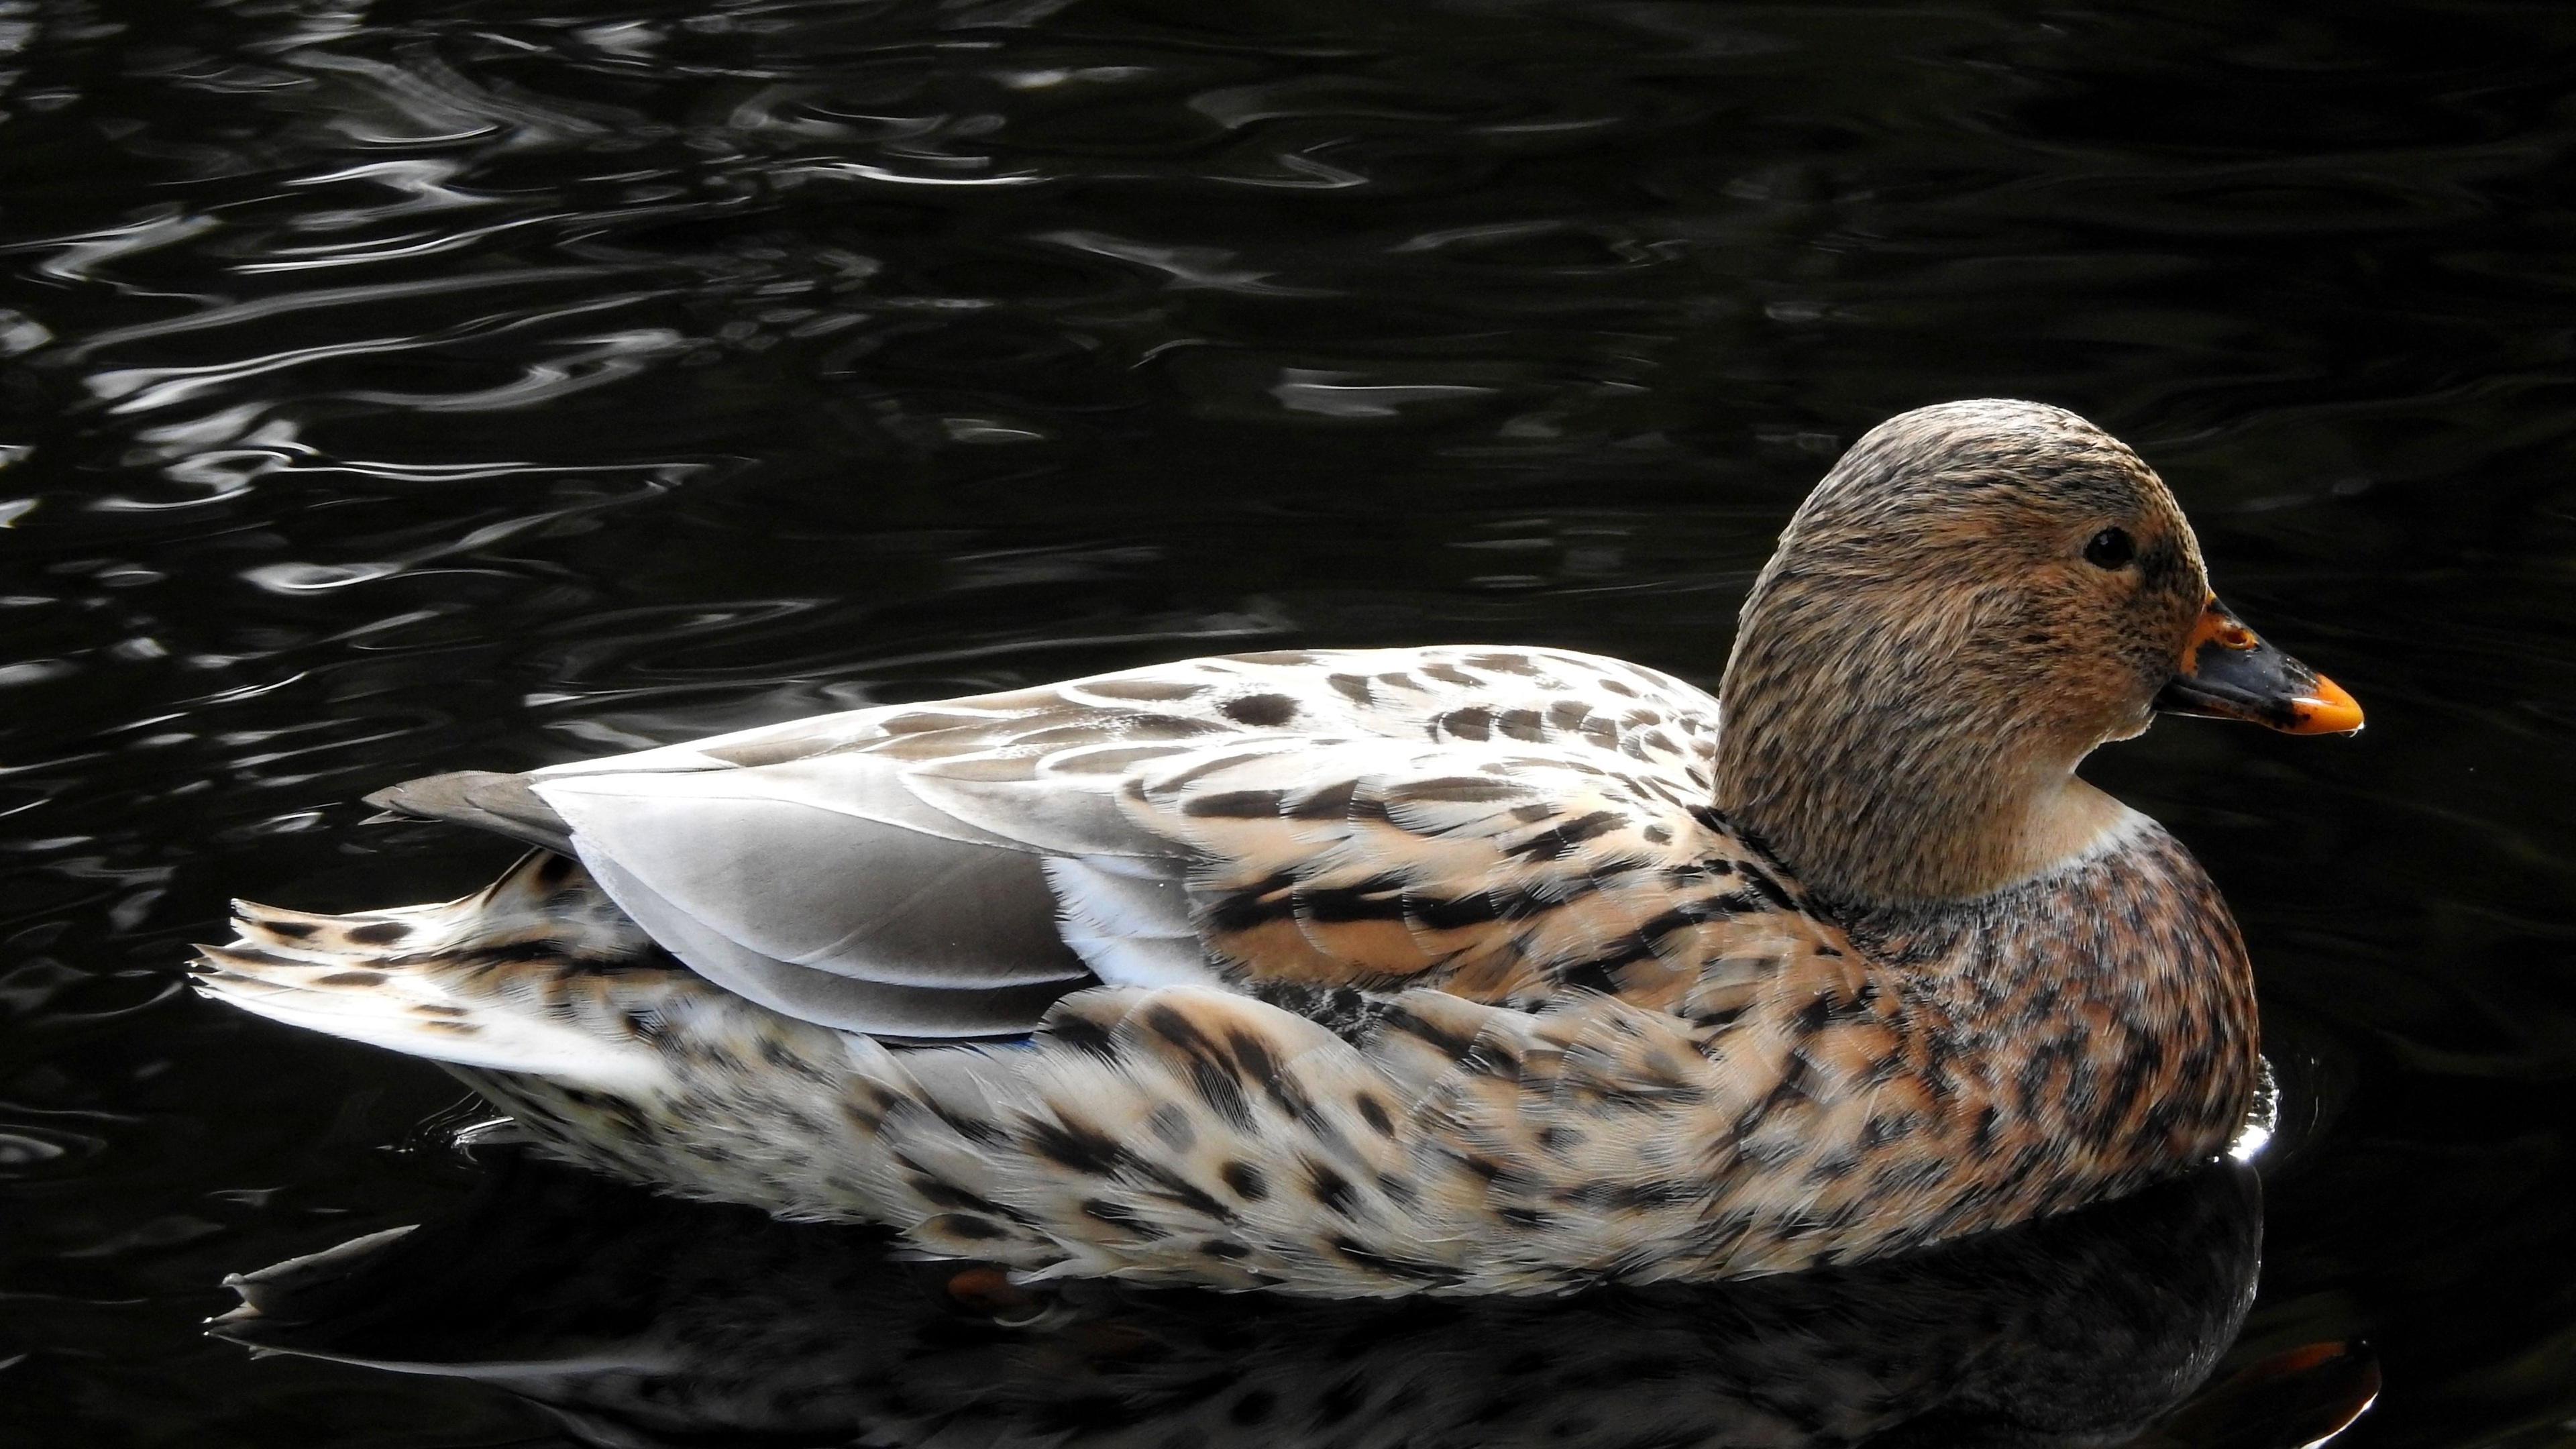 Duck in pond, 4k HD wallpaper, Stunning visuals, Serene natural setting, 3840x2160 4K Desktop